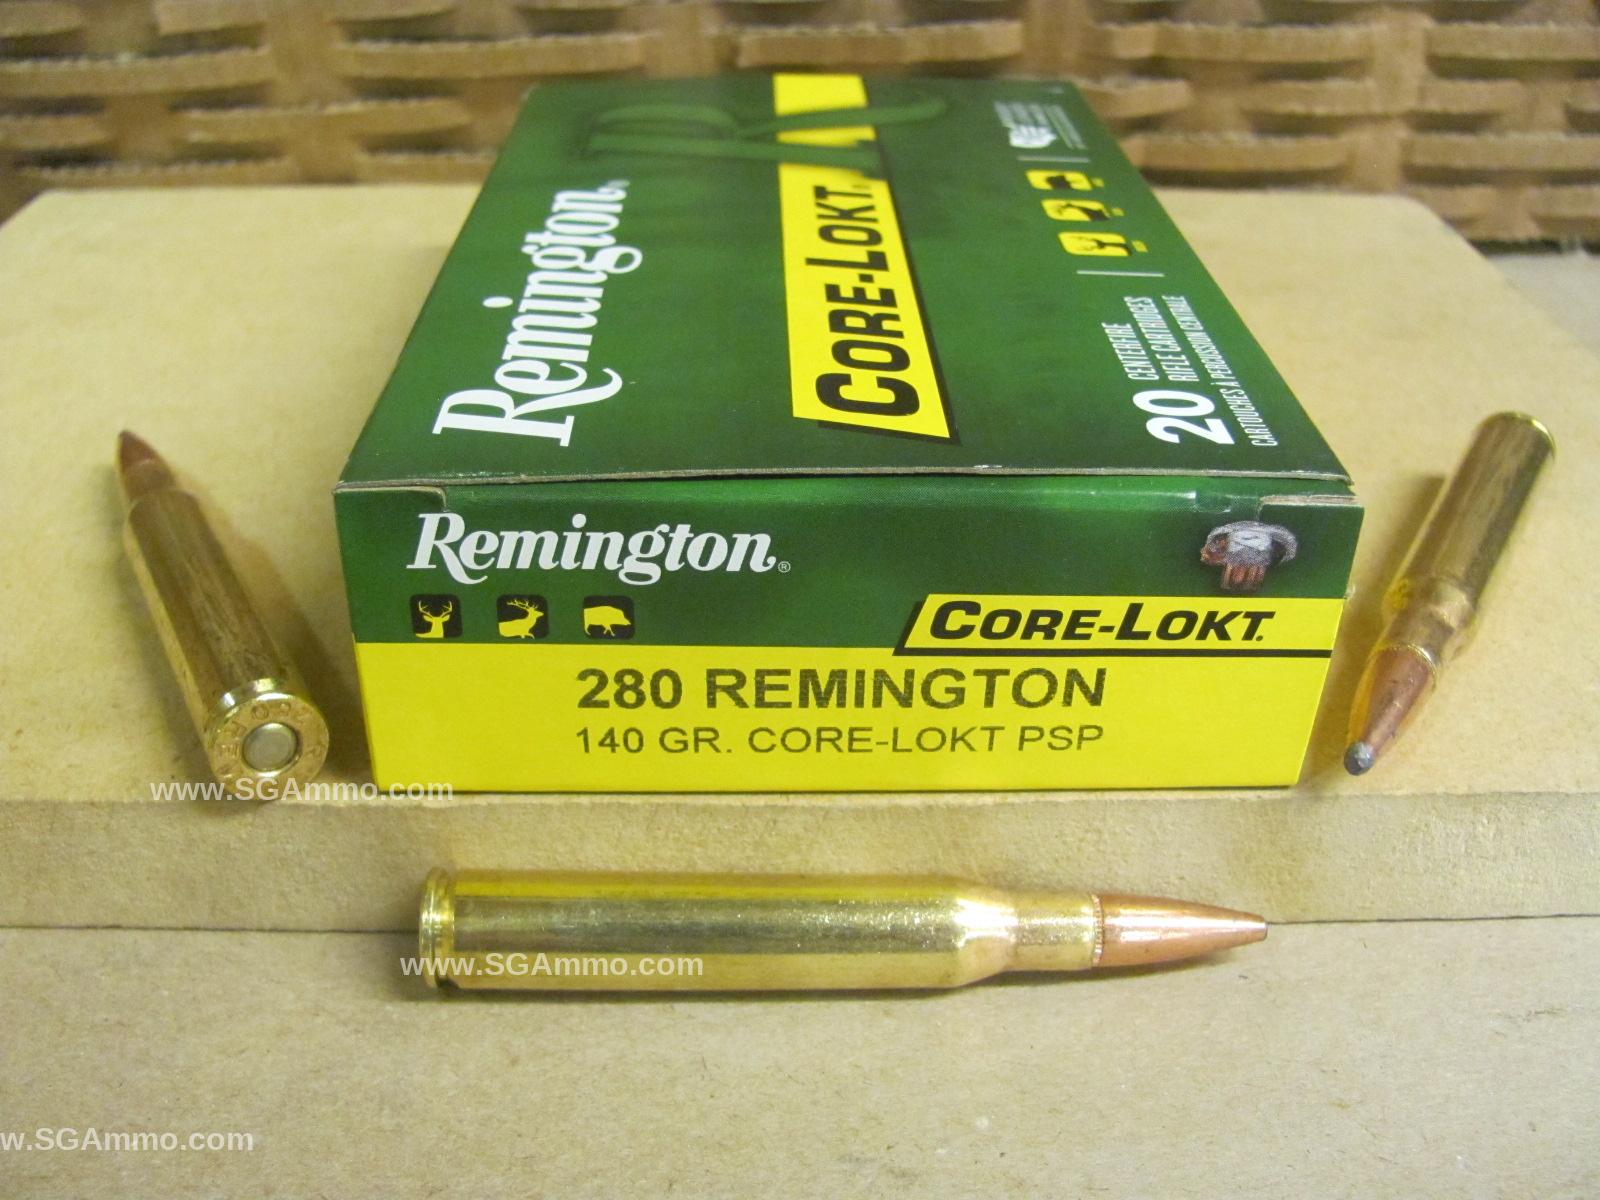 20 Round Box - 280 Rem 140 Grain Pointed Soft Point Core-Lokt Remington Ammo - R280R3